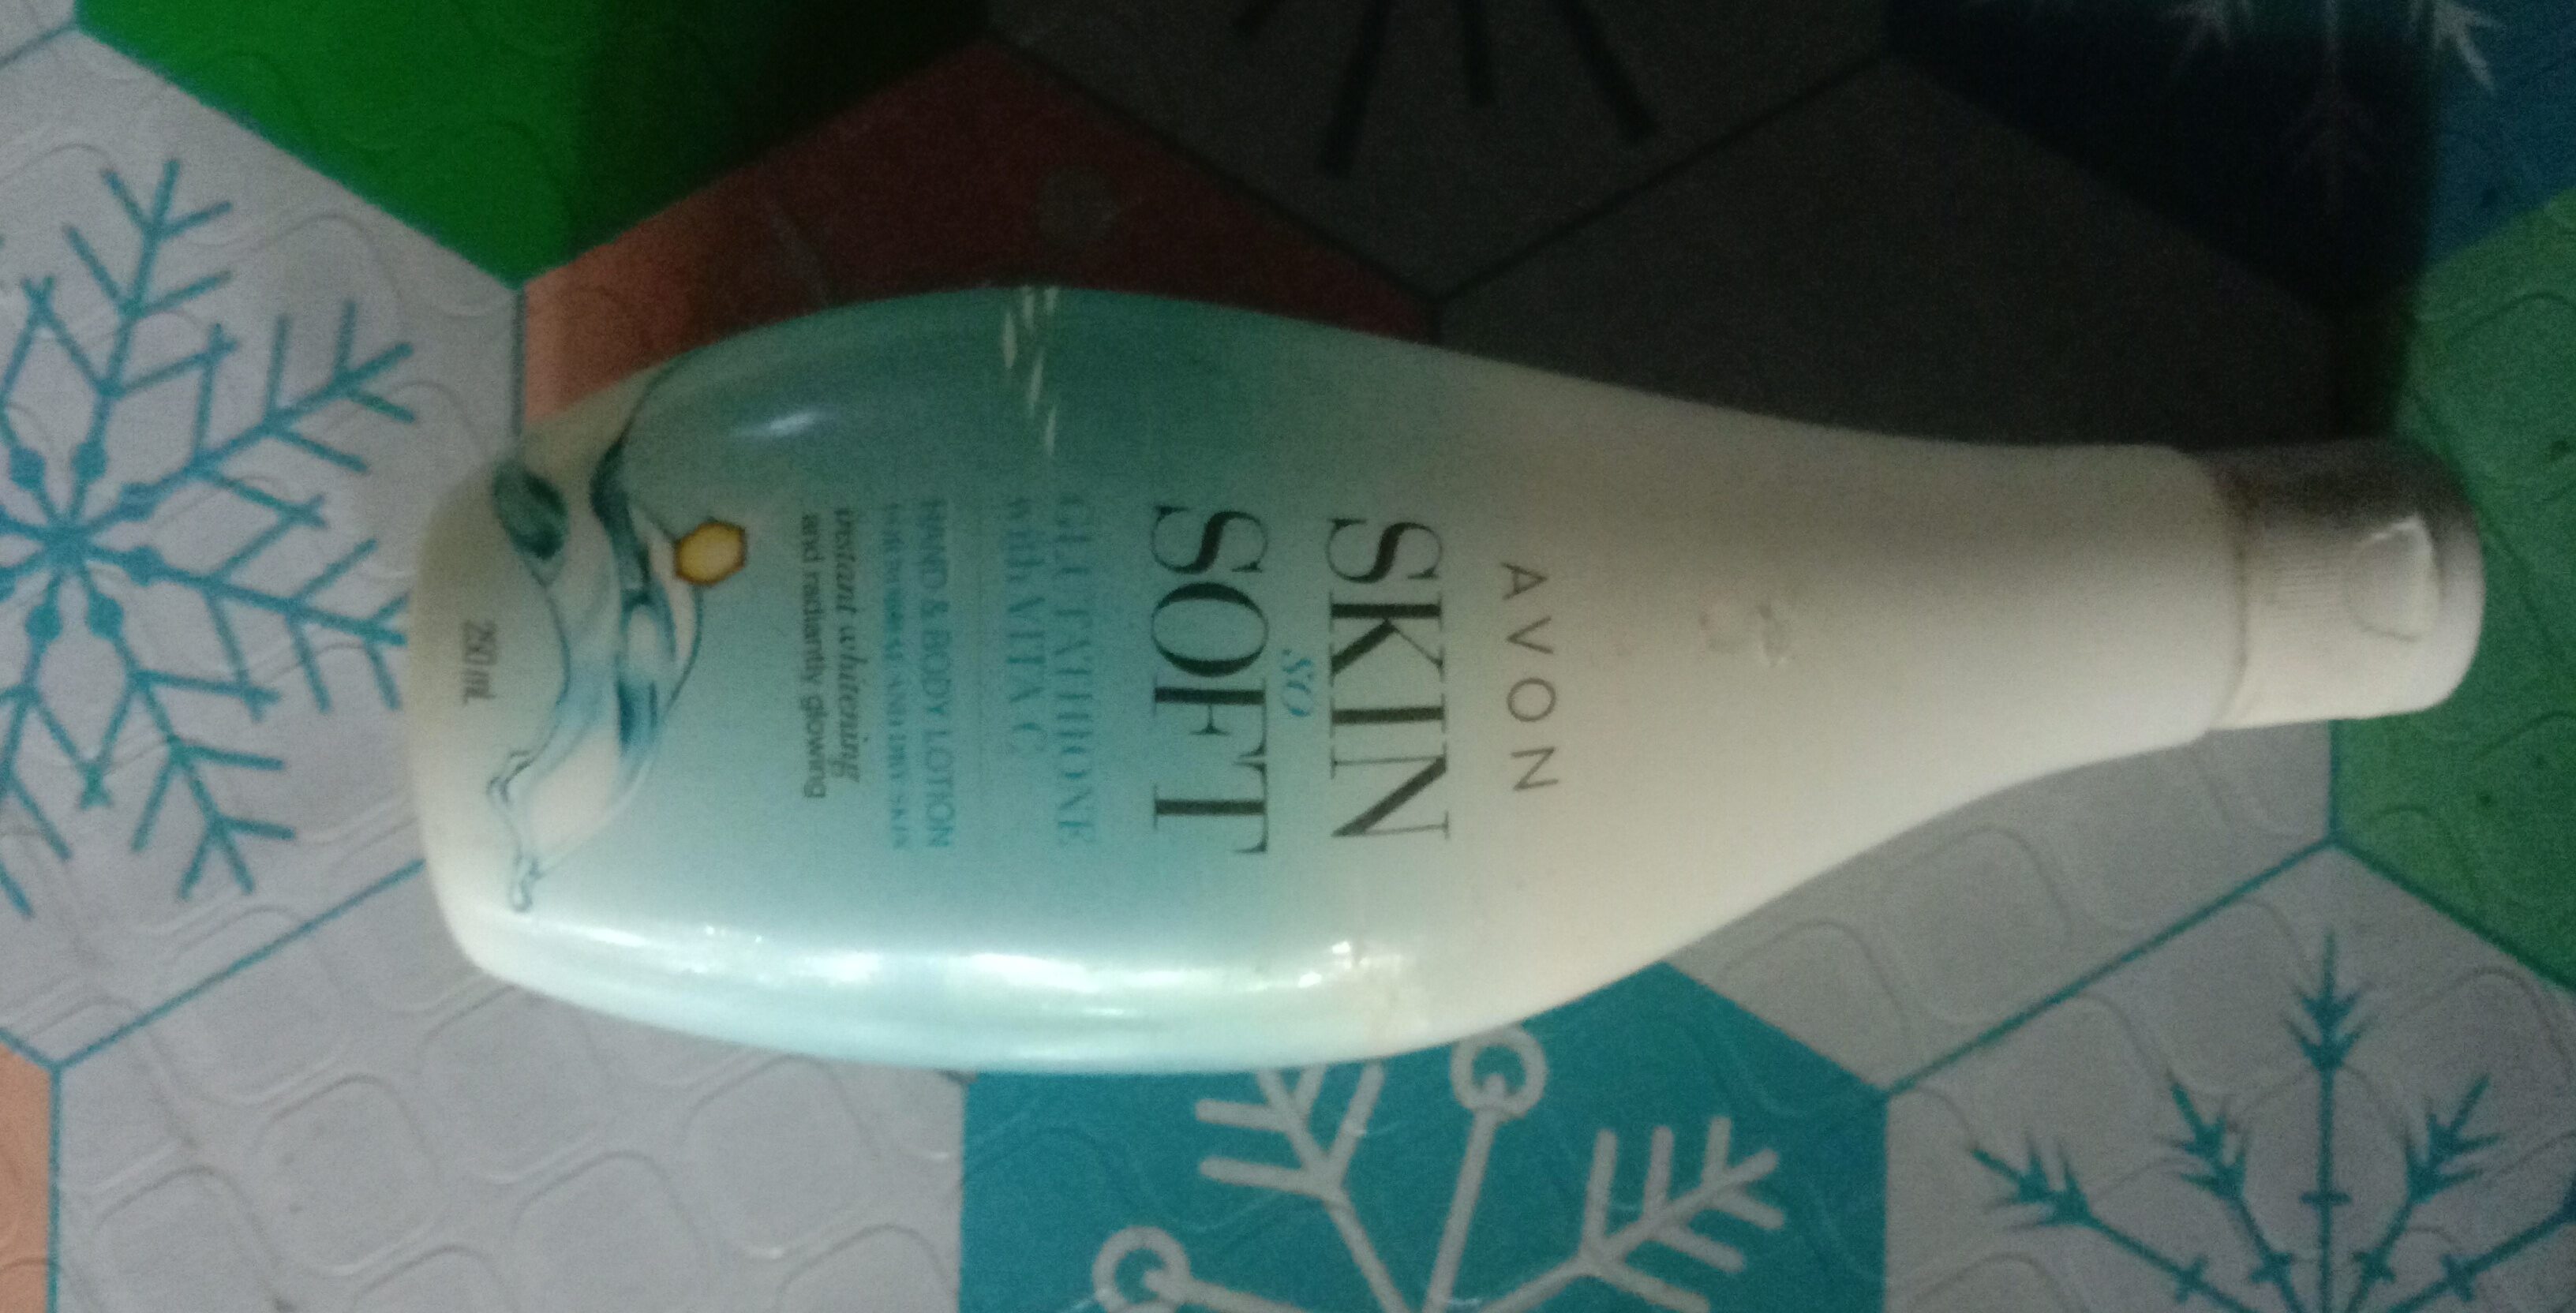 Avon Skin so Soft - Product - en